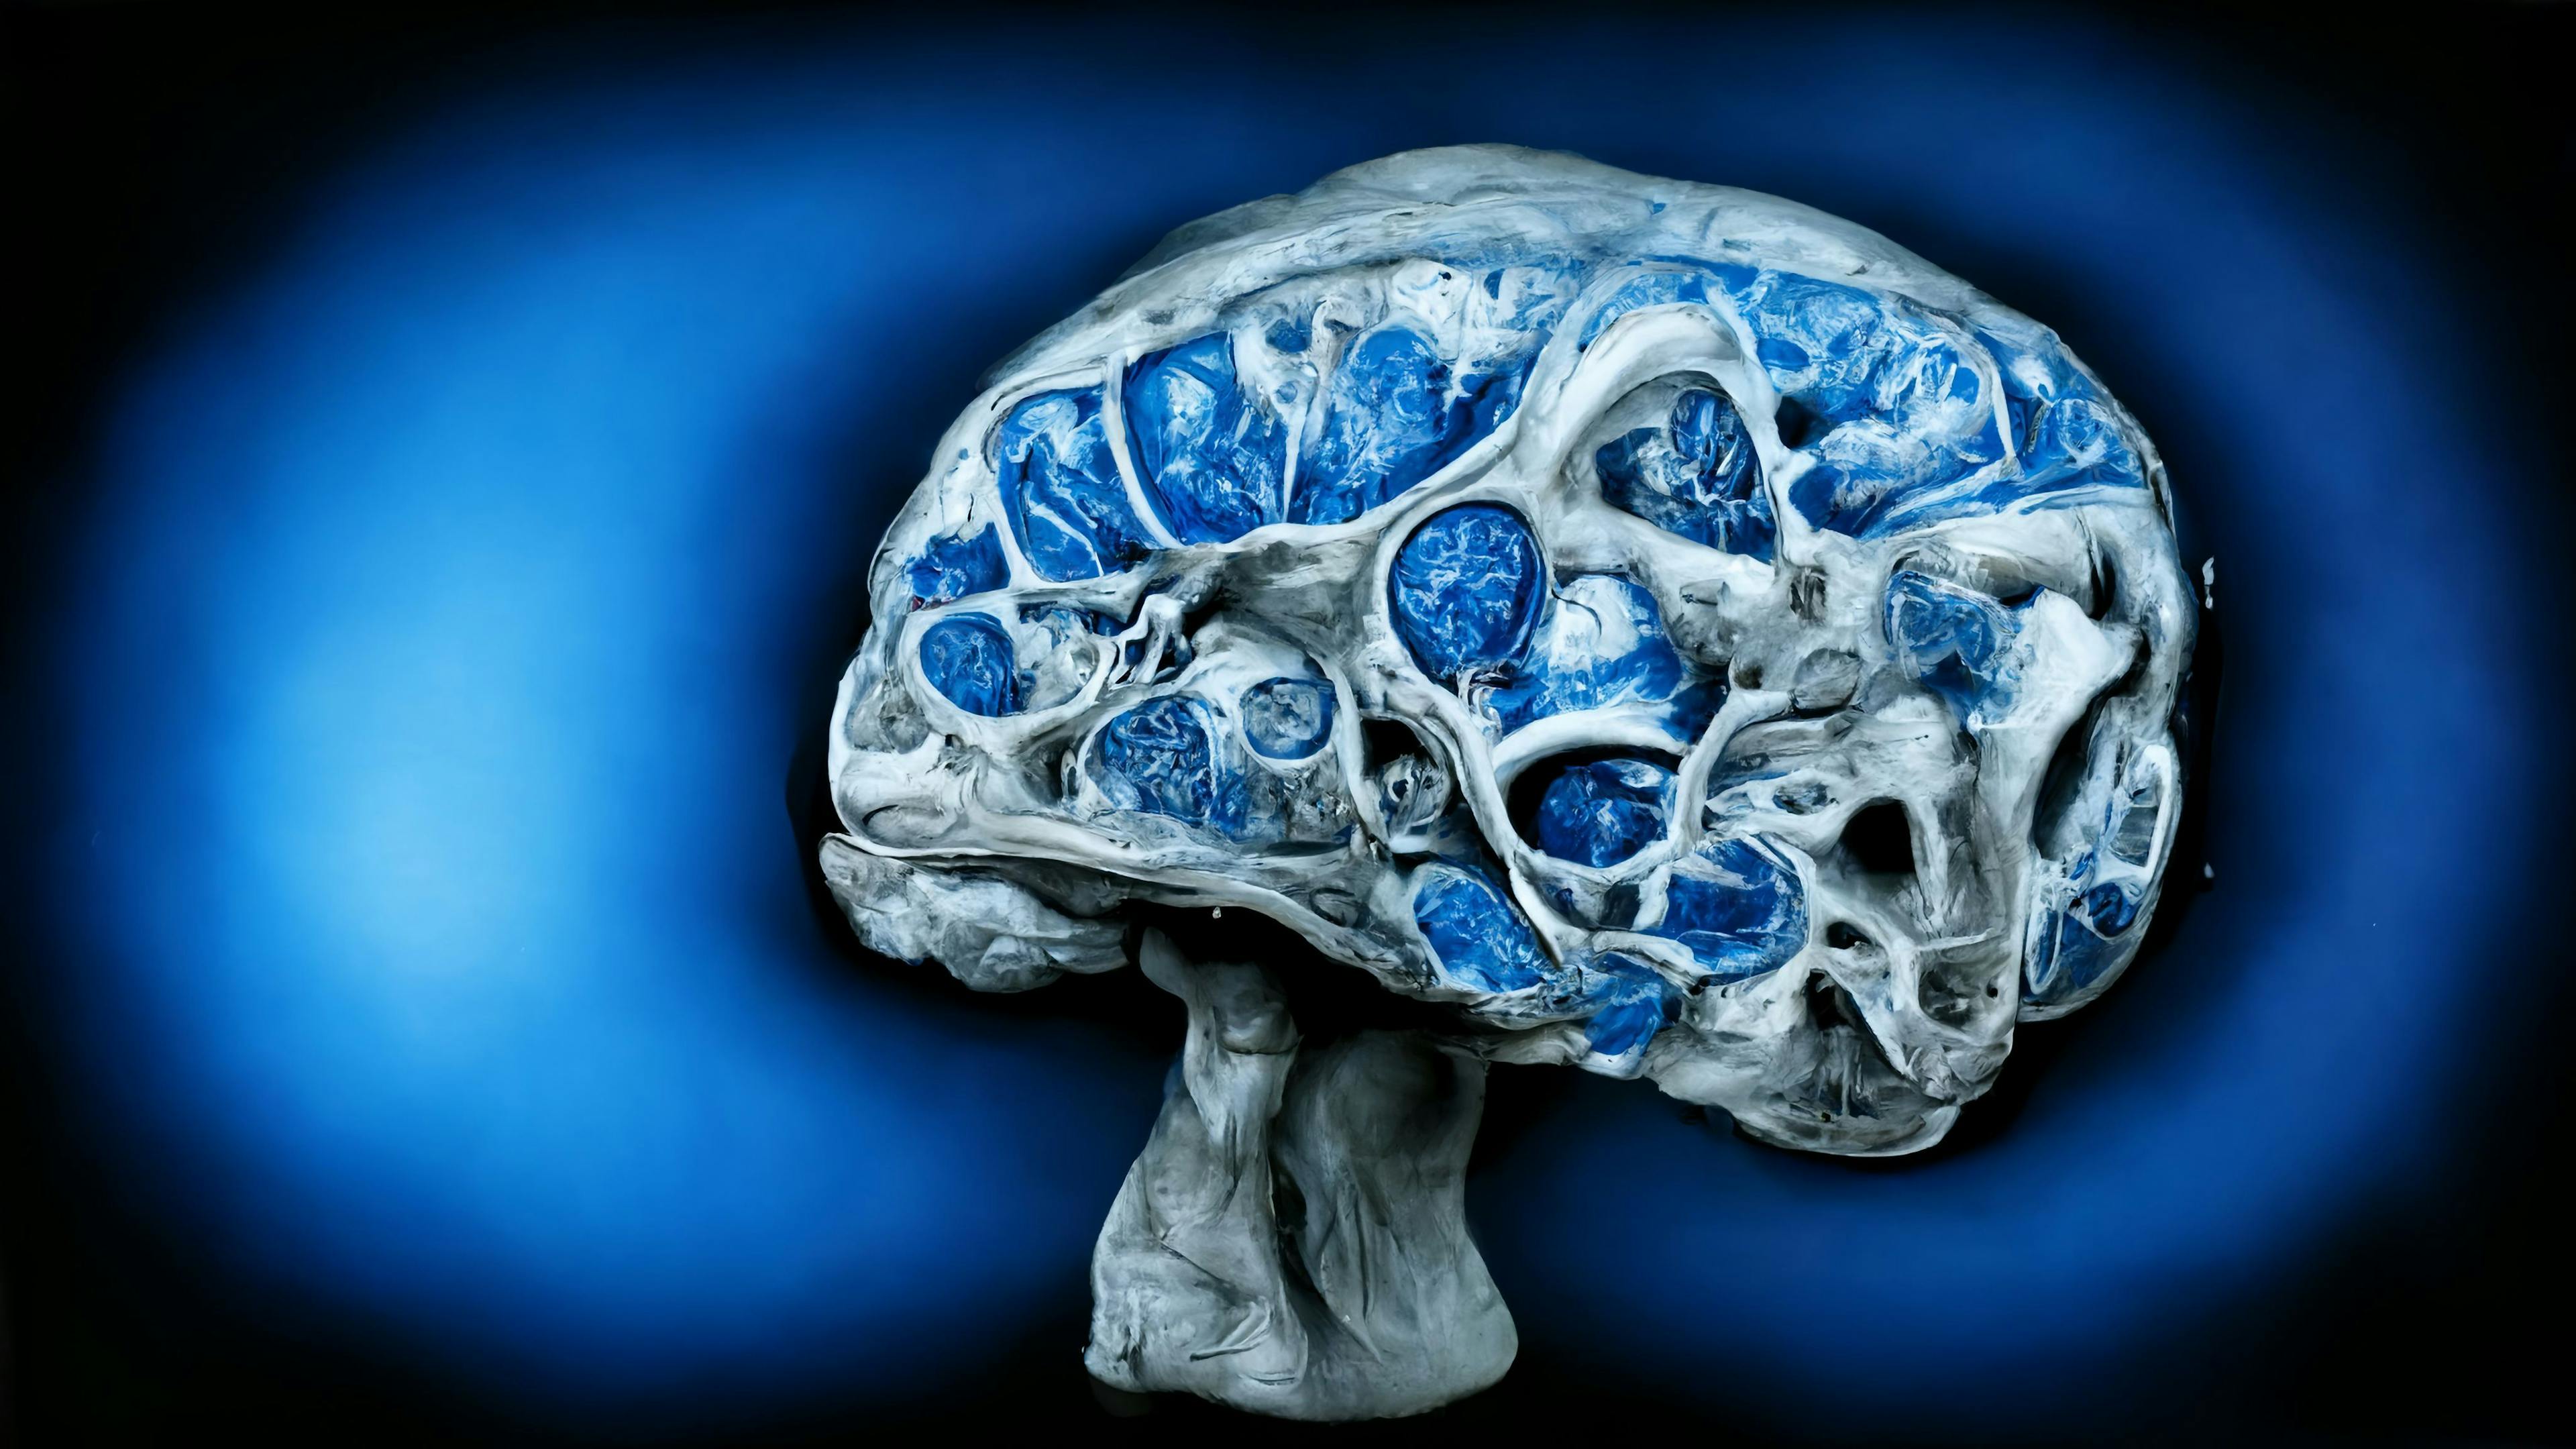 Brain Atrophy and Degeneration Concept | image credit: catalin - stock.adobe.com